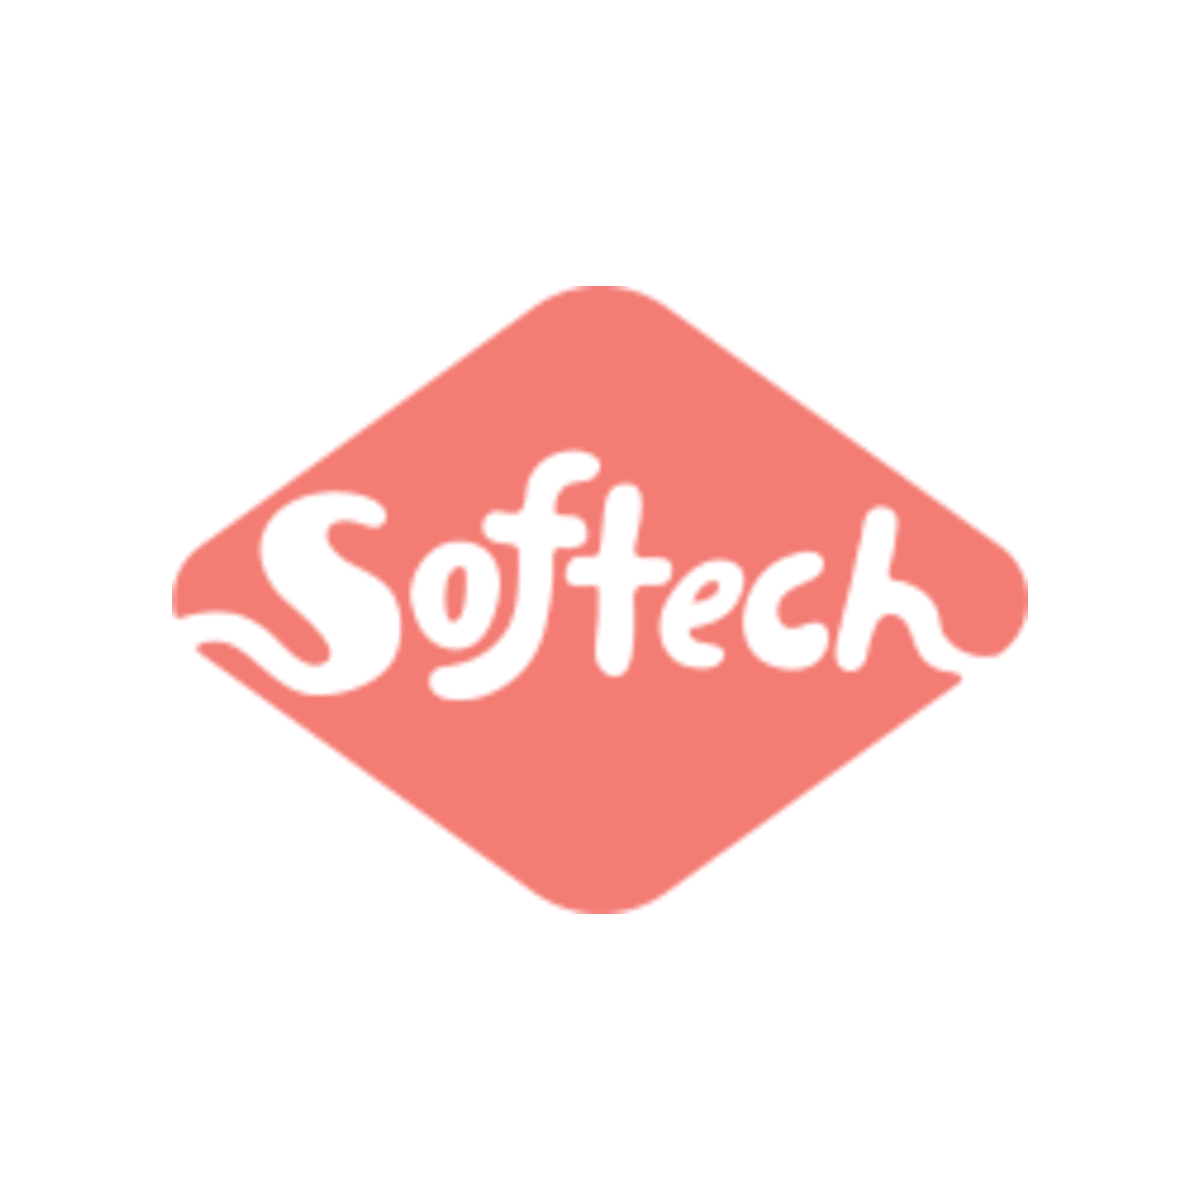 SOFTECH